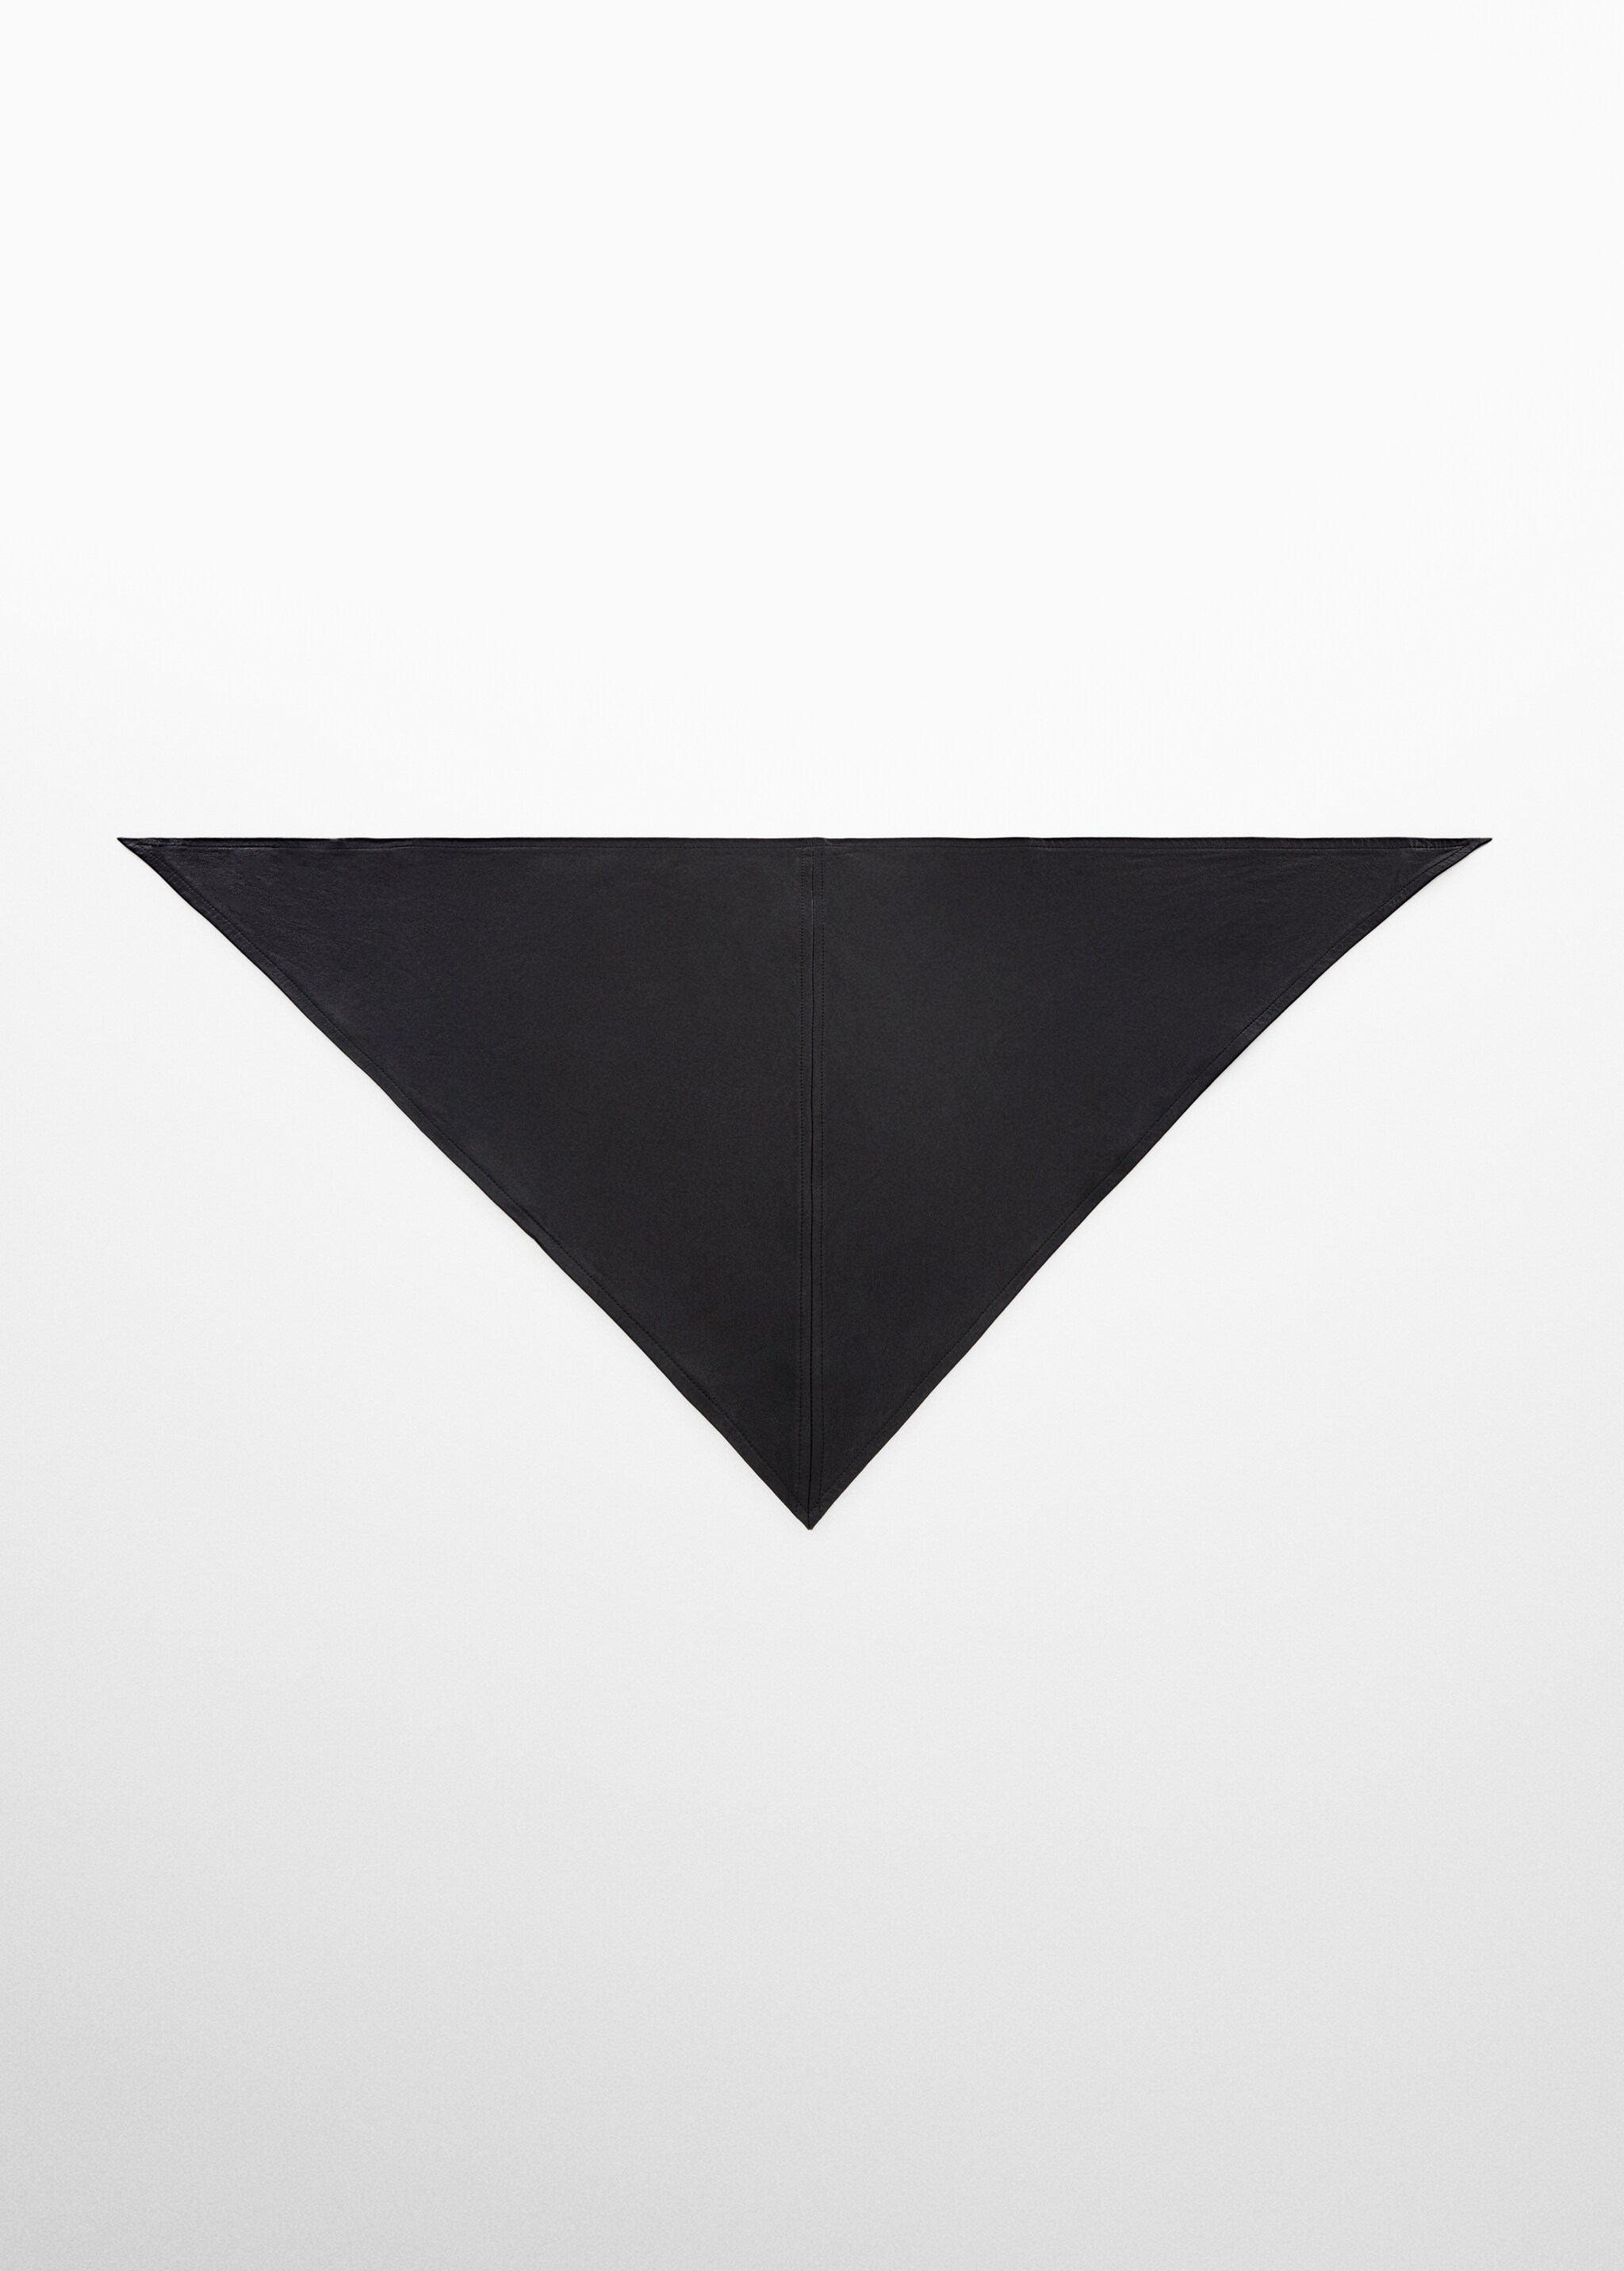 100% leather handkerchief - Medium plane